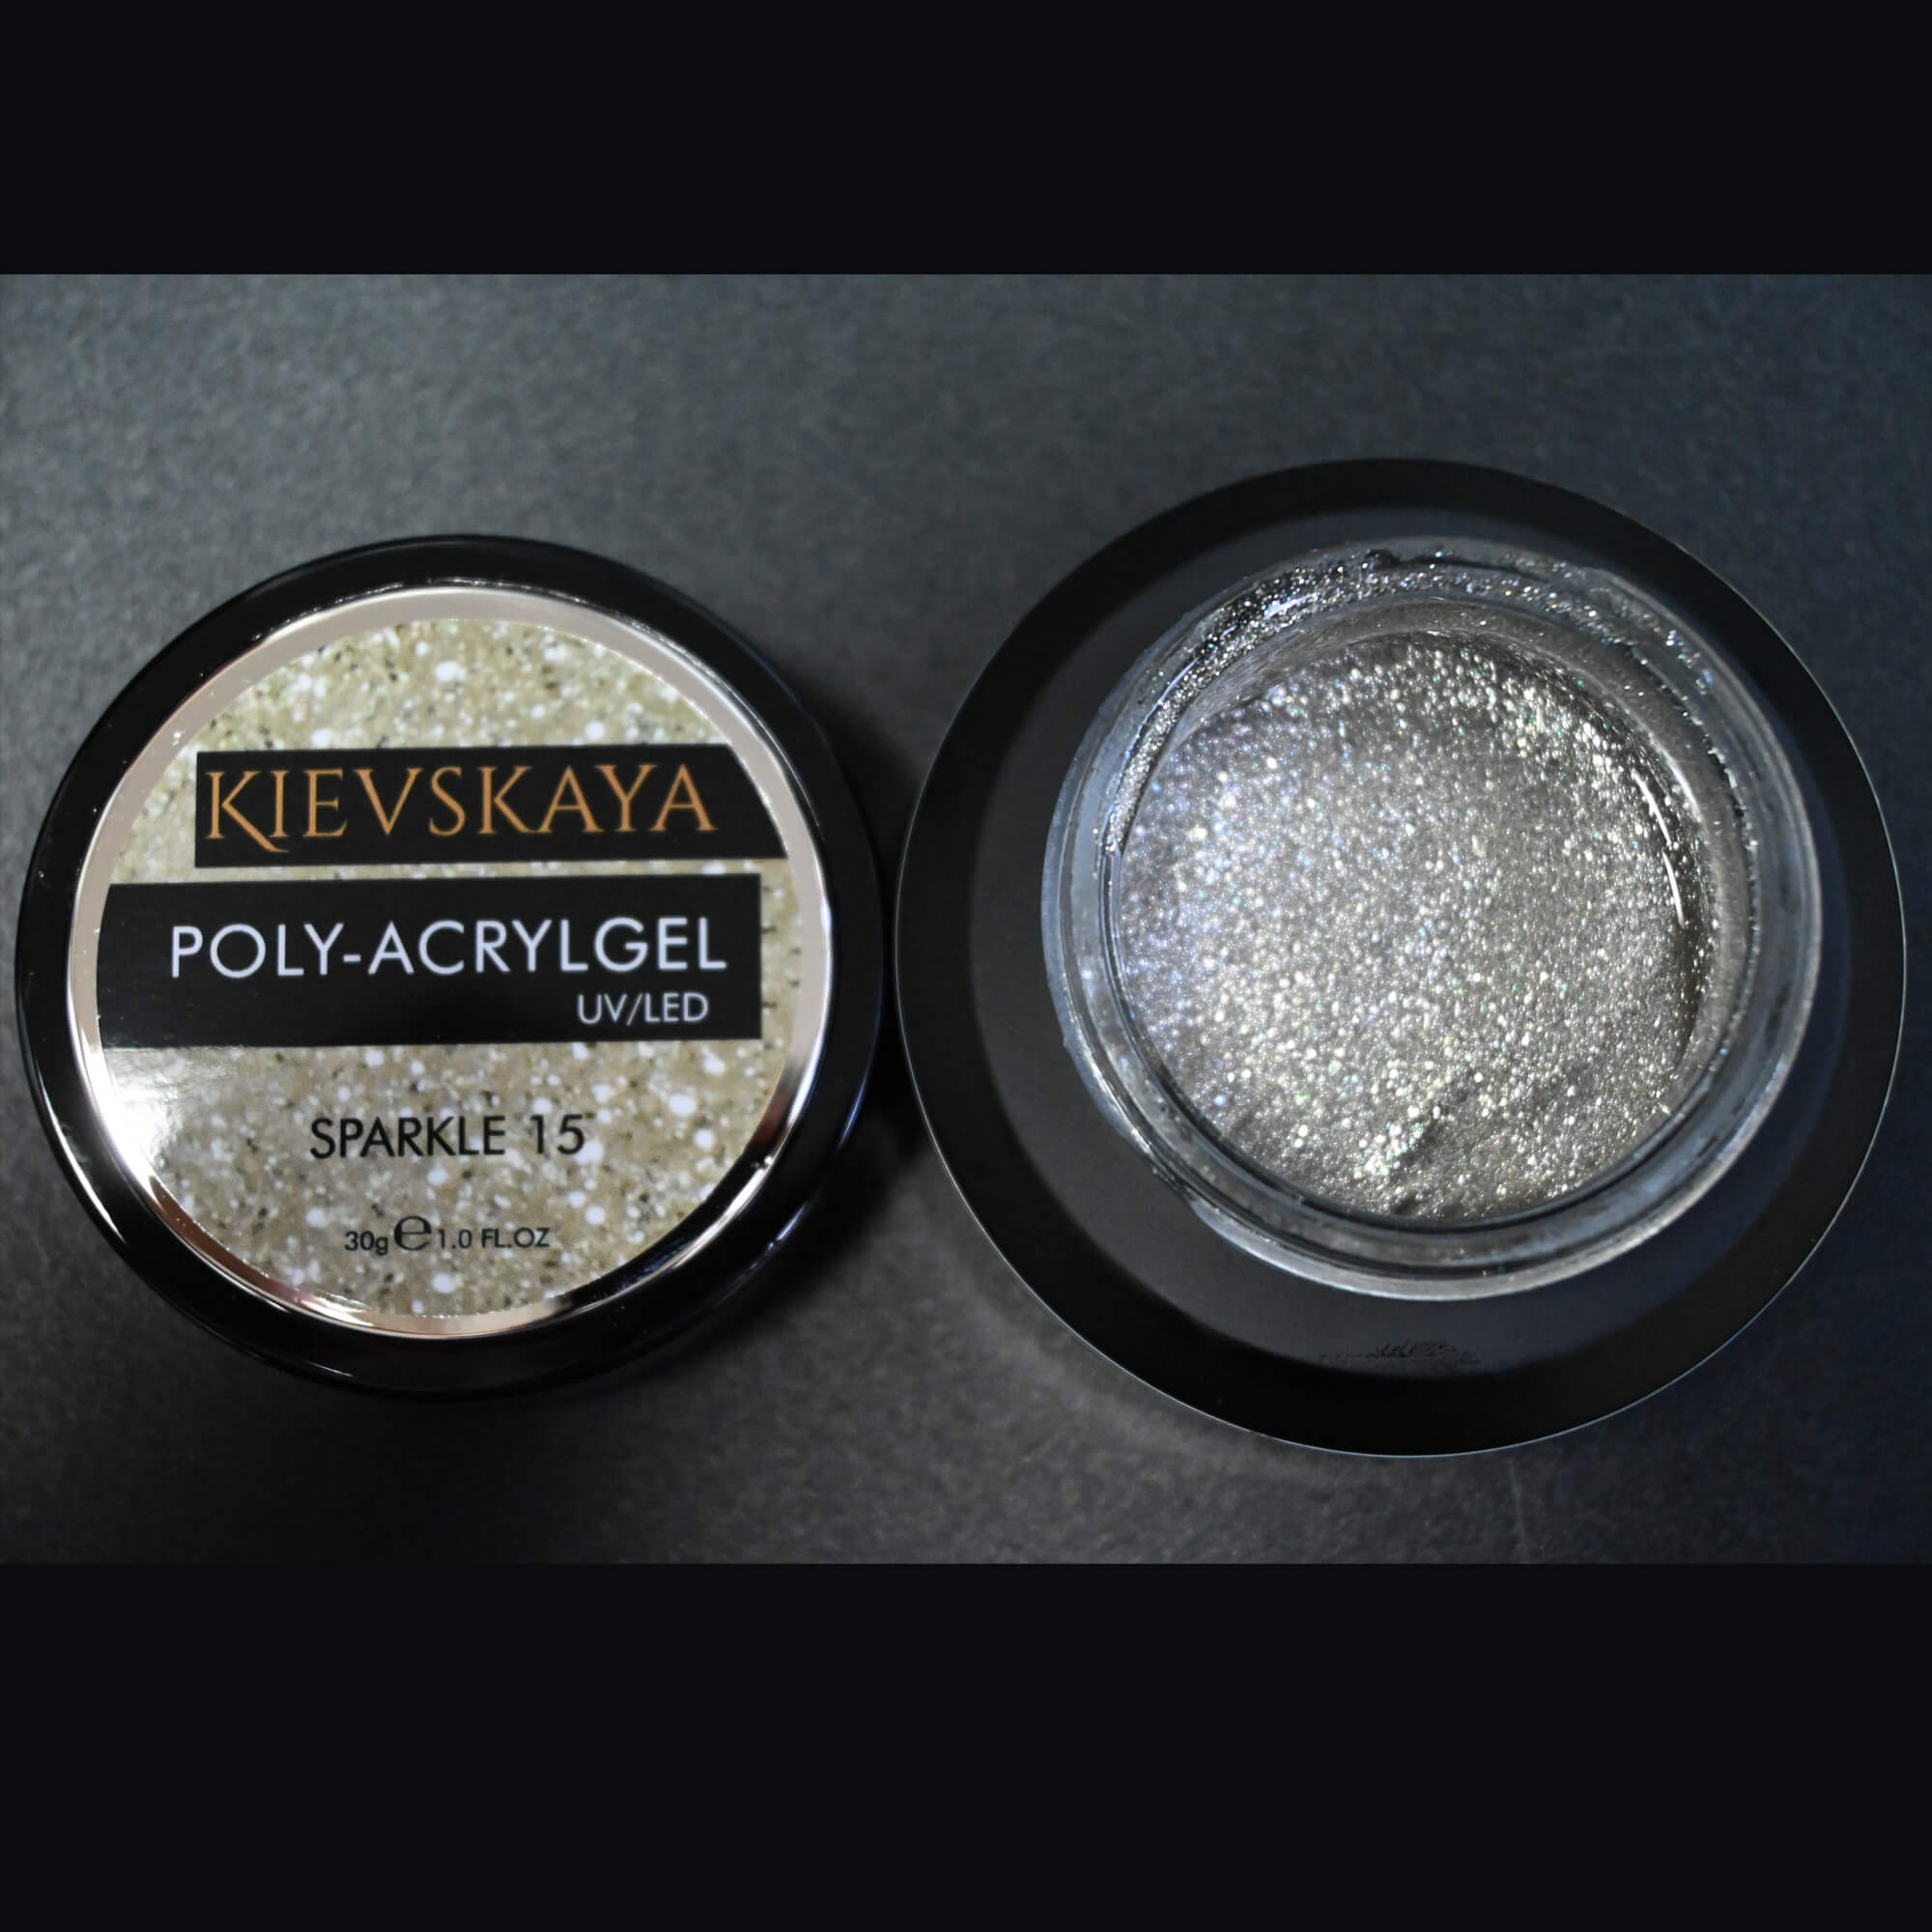 Poly-Acrylgel Sparkle Kievskaya 30gr-SPARKLE15 - SPARKLE15 - Everin.ro